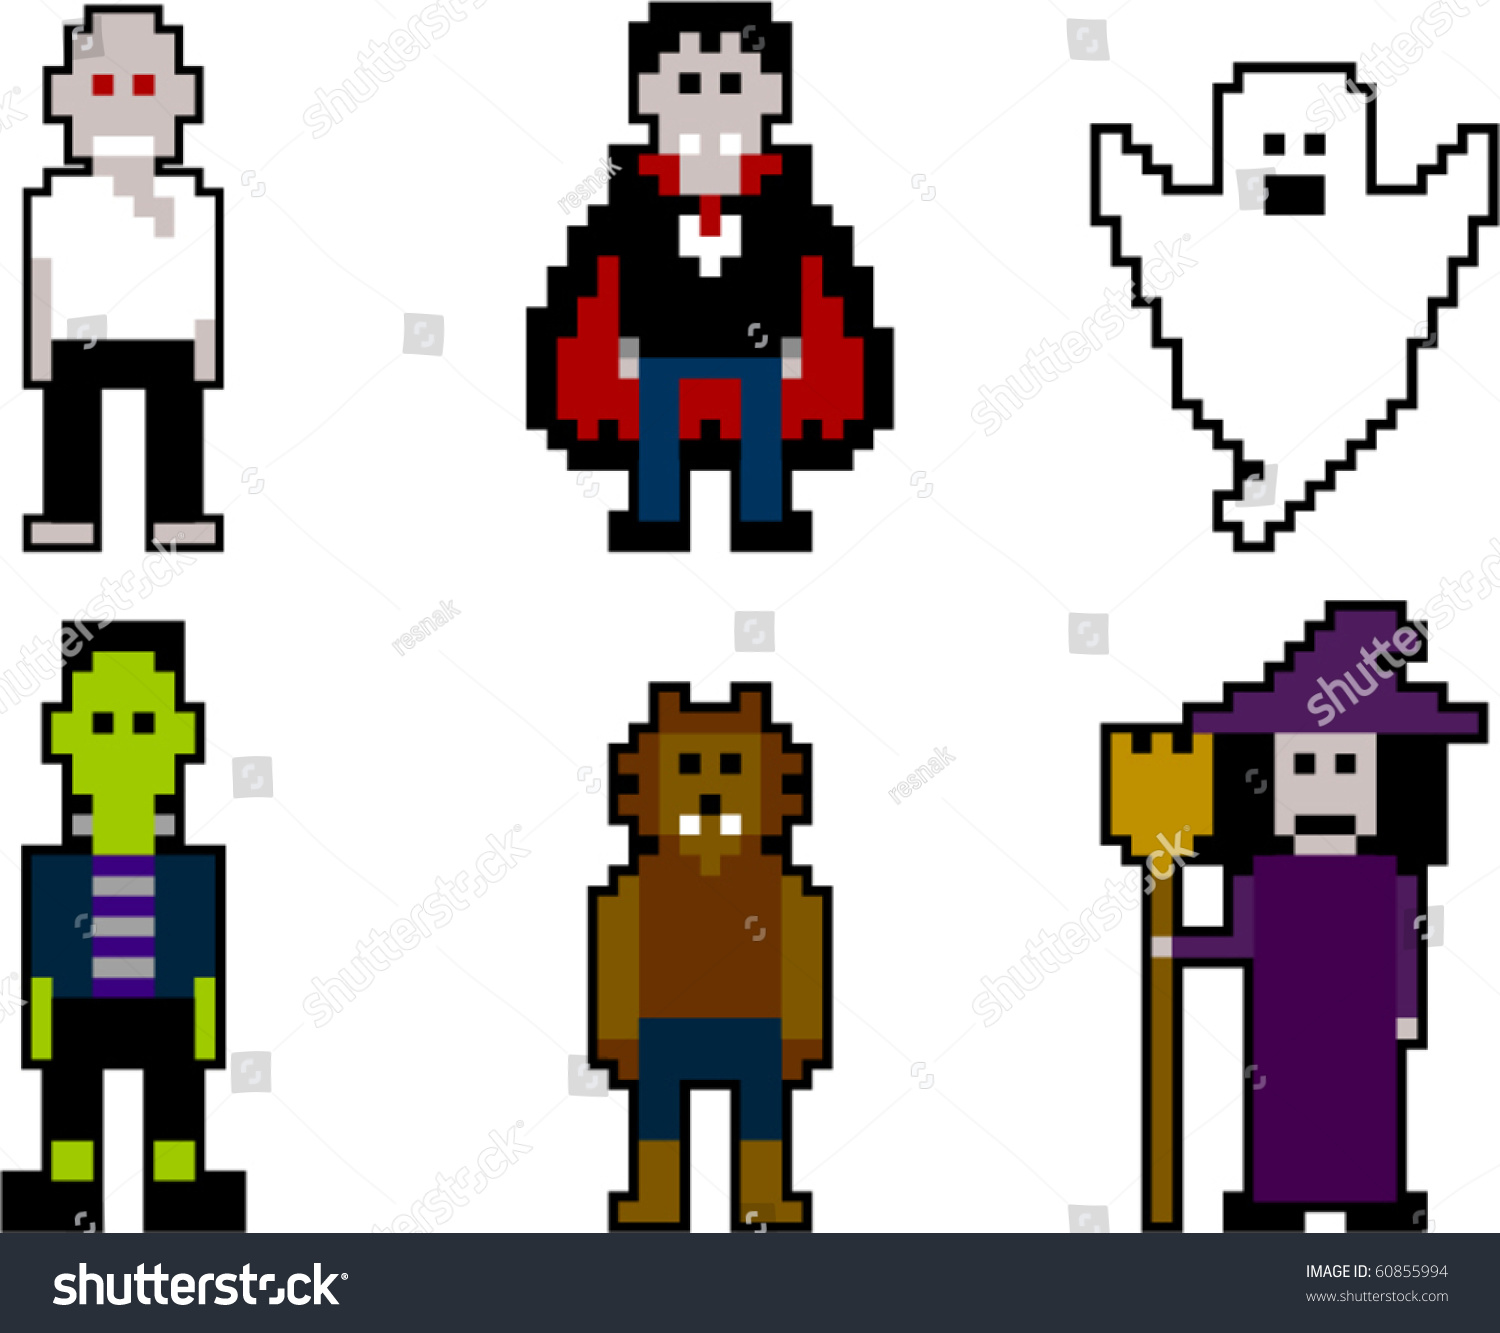 Vector Pixel Art Halloween Stock Photo 60855994 Avopixcom